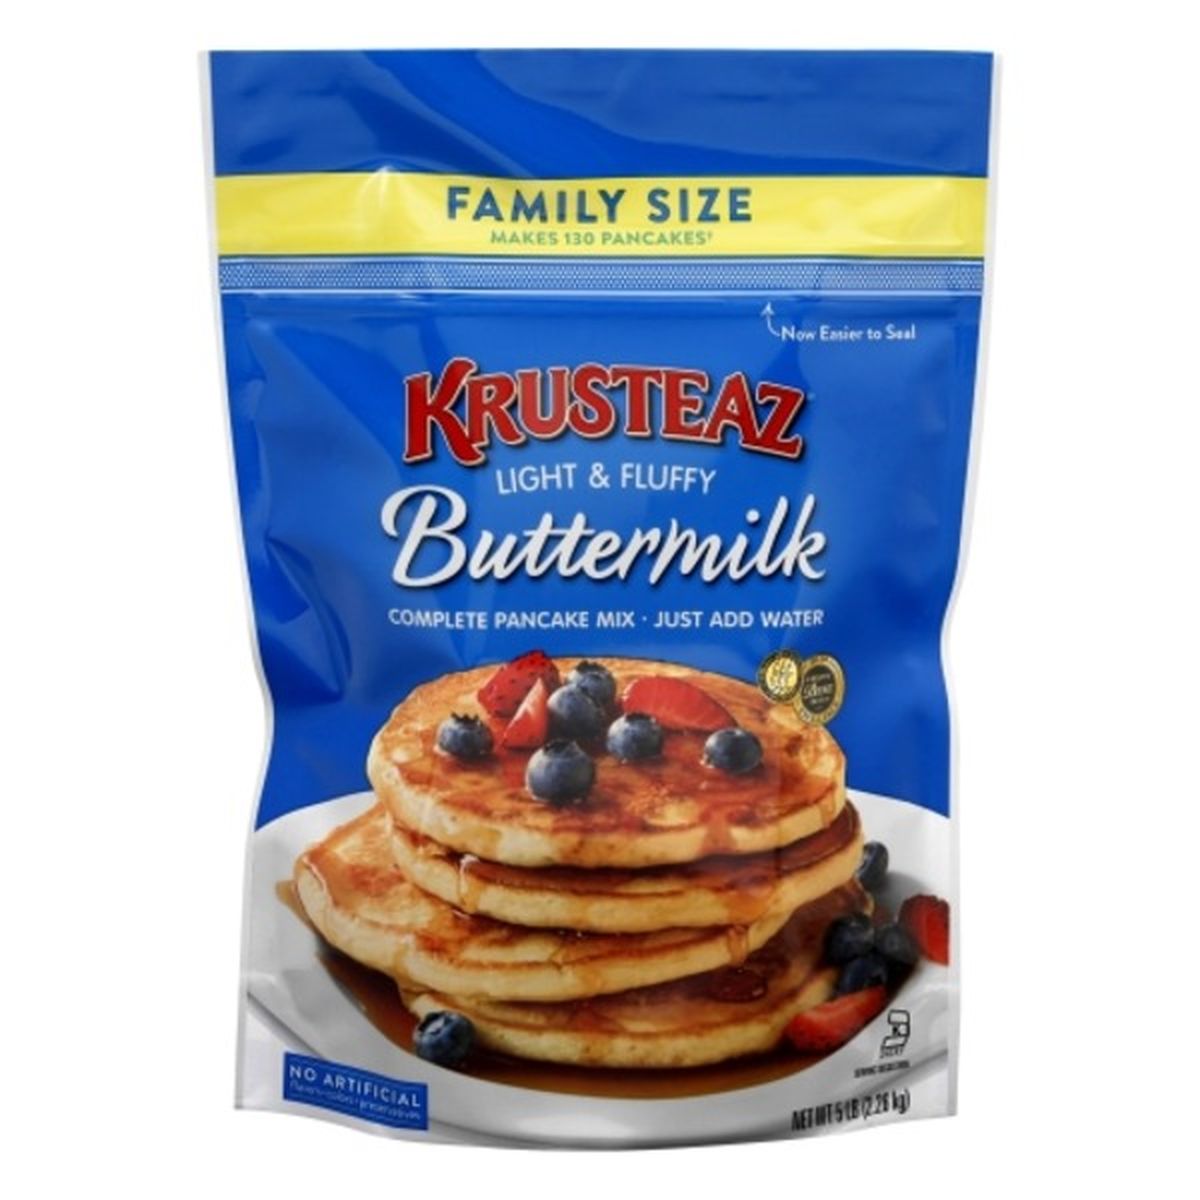 Calories in Krusteaz Pancake Mix, Buttermilk, Light & Fluffy, Family Size